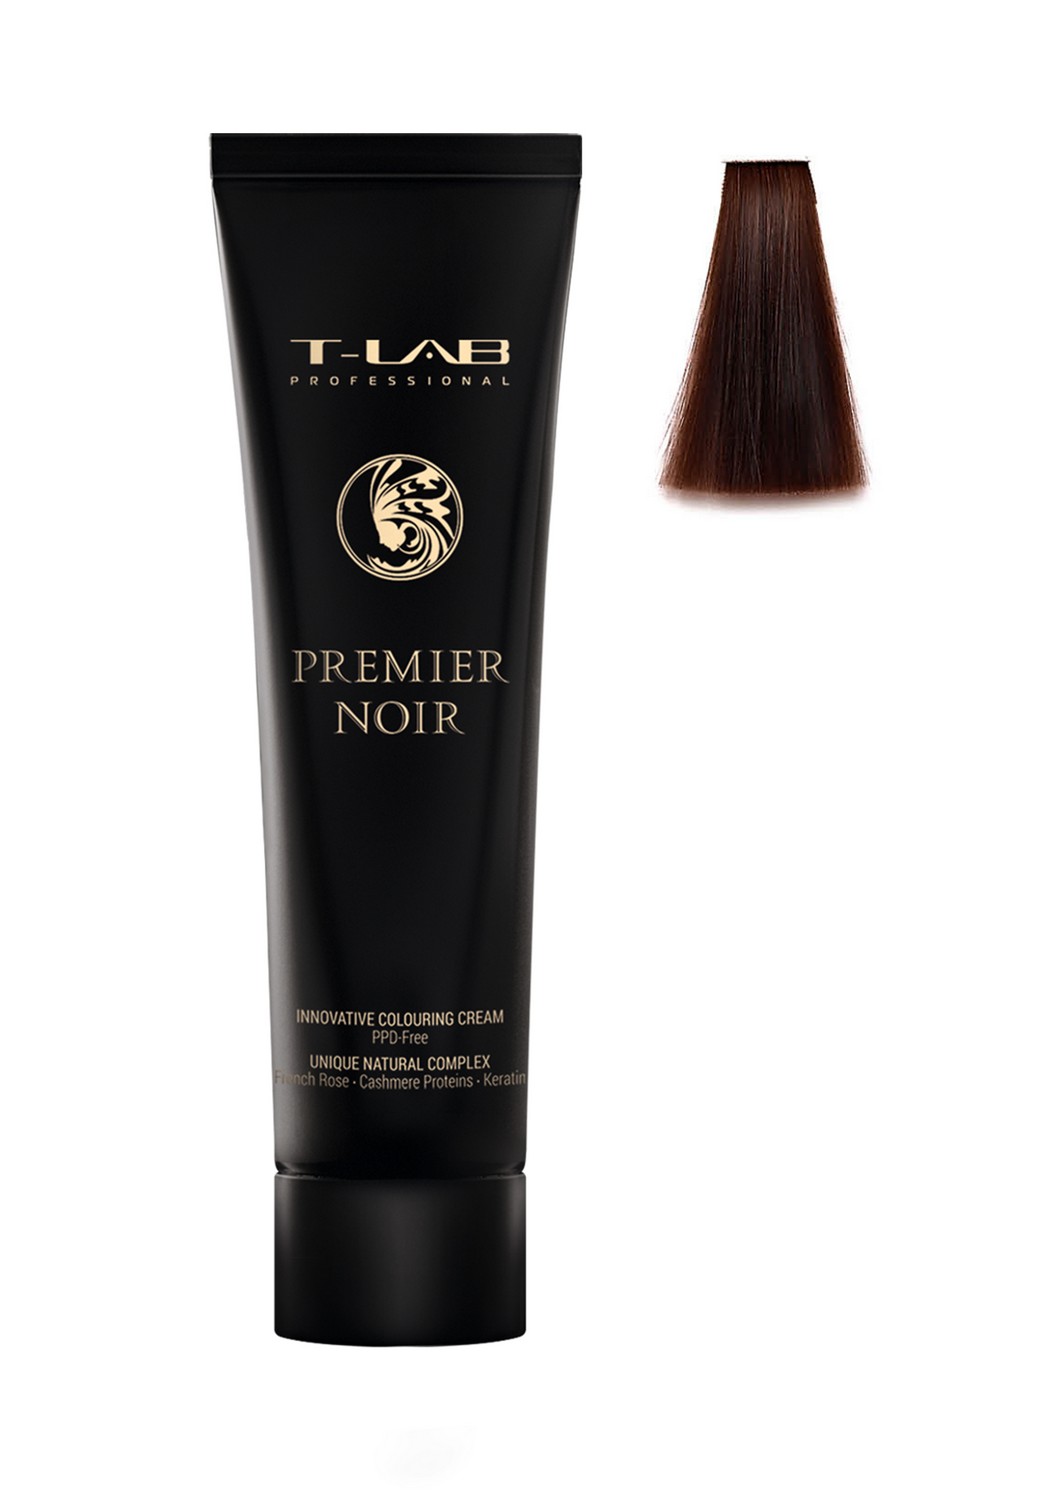 Крем-фарба T-LAB Professional Premier Noir colouring cream, відтінок 6.52 (dark mahogany iridescent blonde) - фото 2